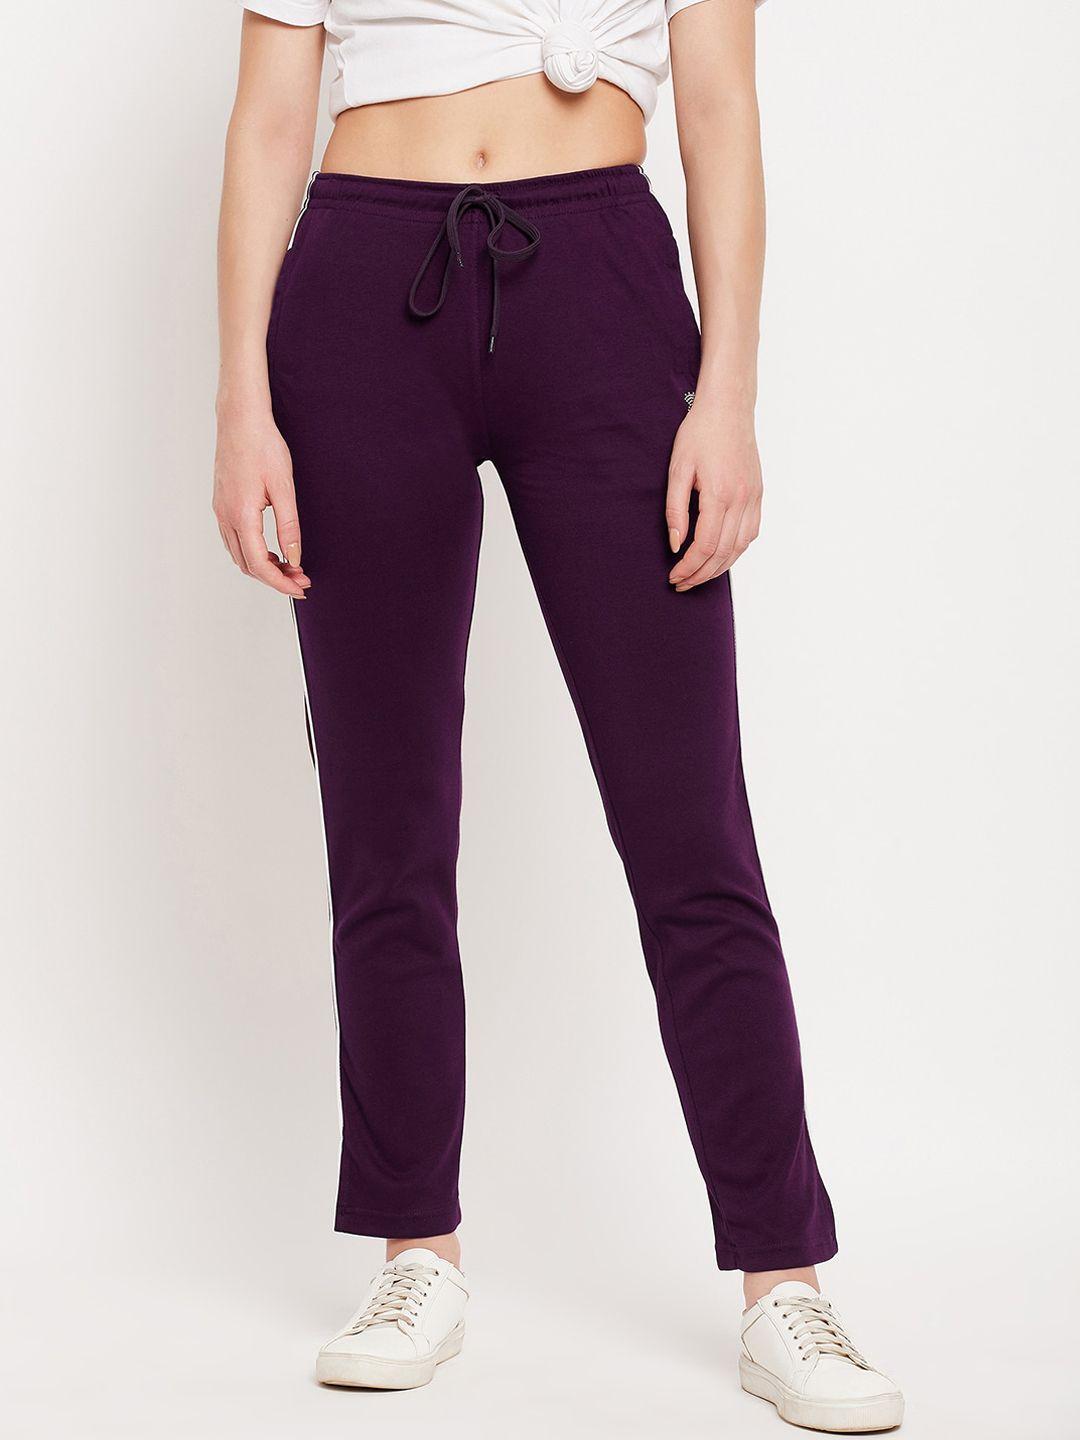 duke-women-purple-solid-track-pants